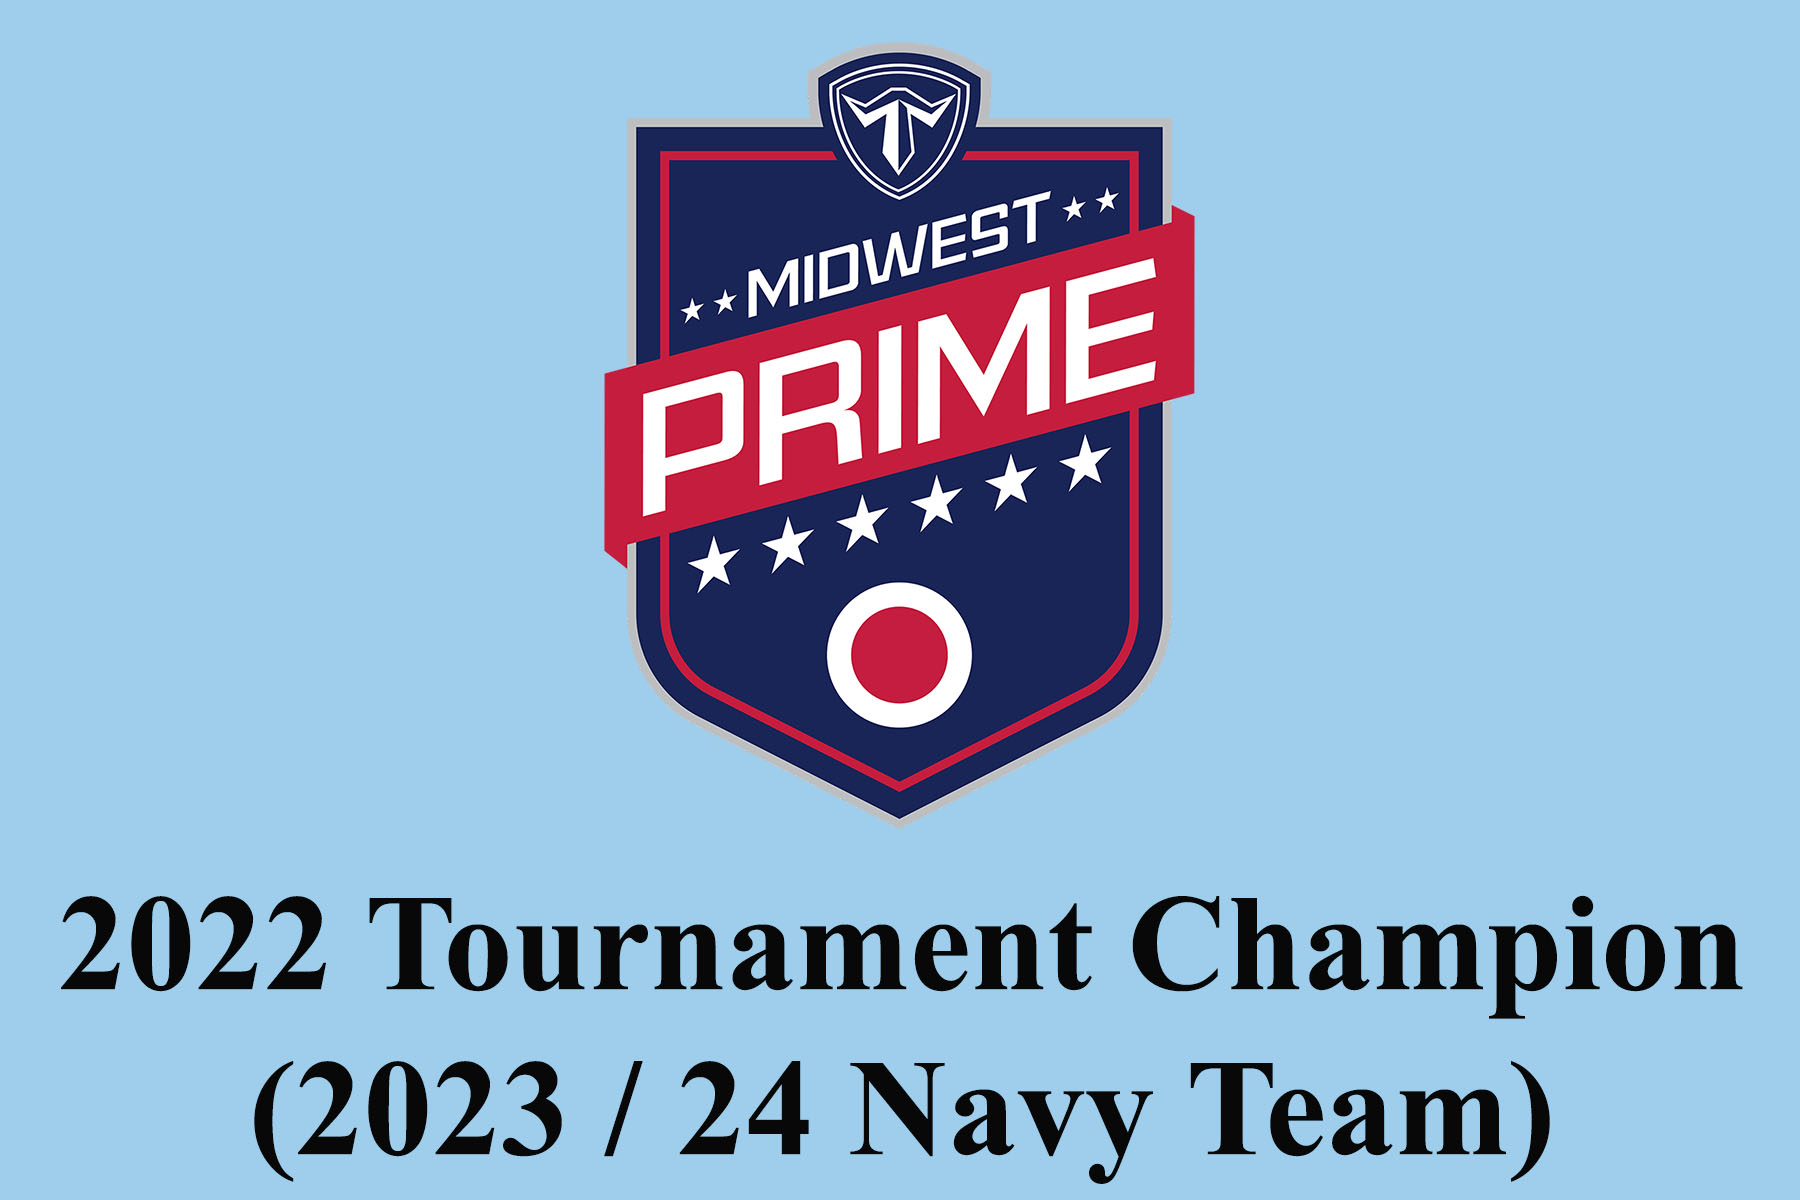 2022 Midwest Prime Tournament Champion